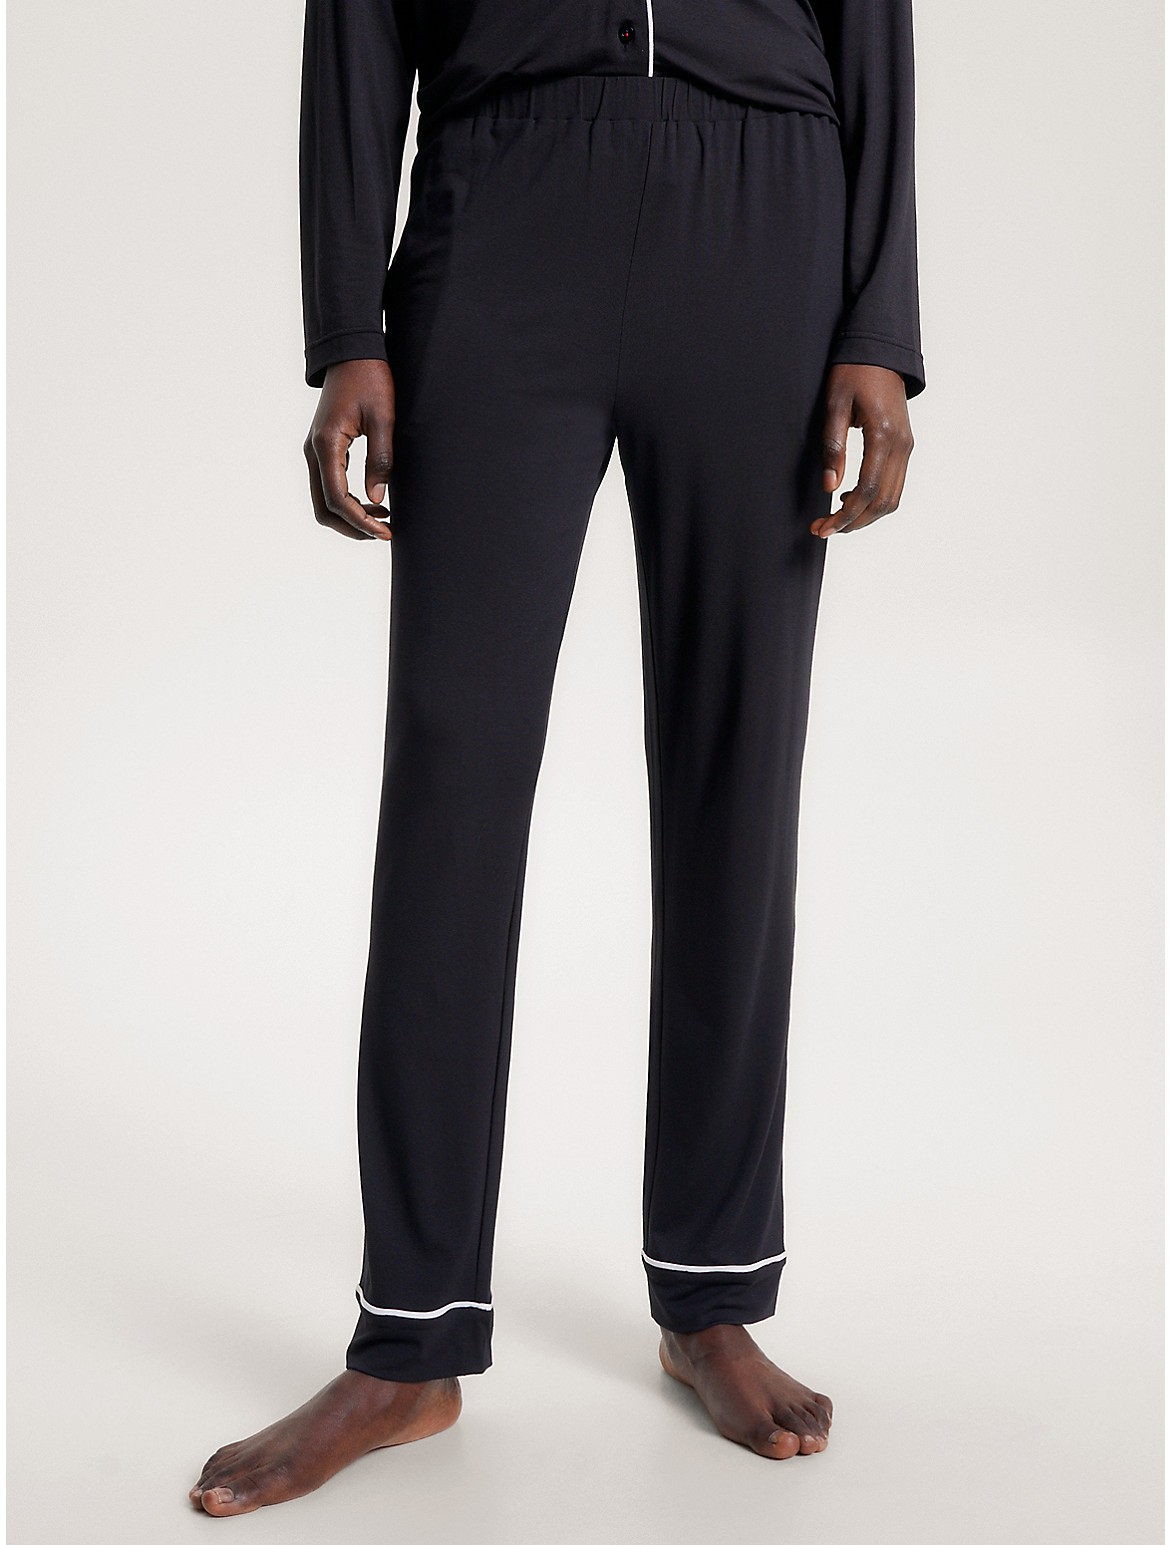 Tommy Hilfiger Women's Piped Trim Pajama Pant - Black - XS